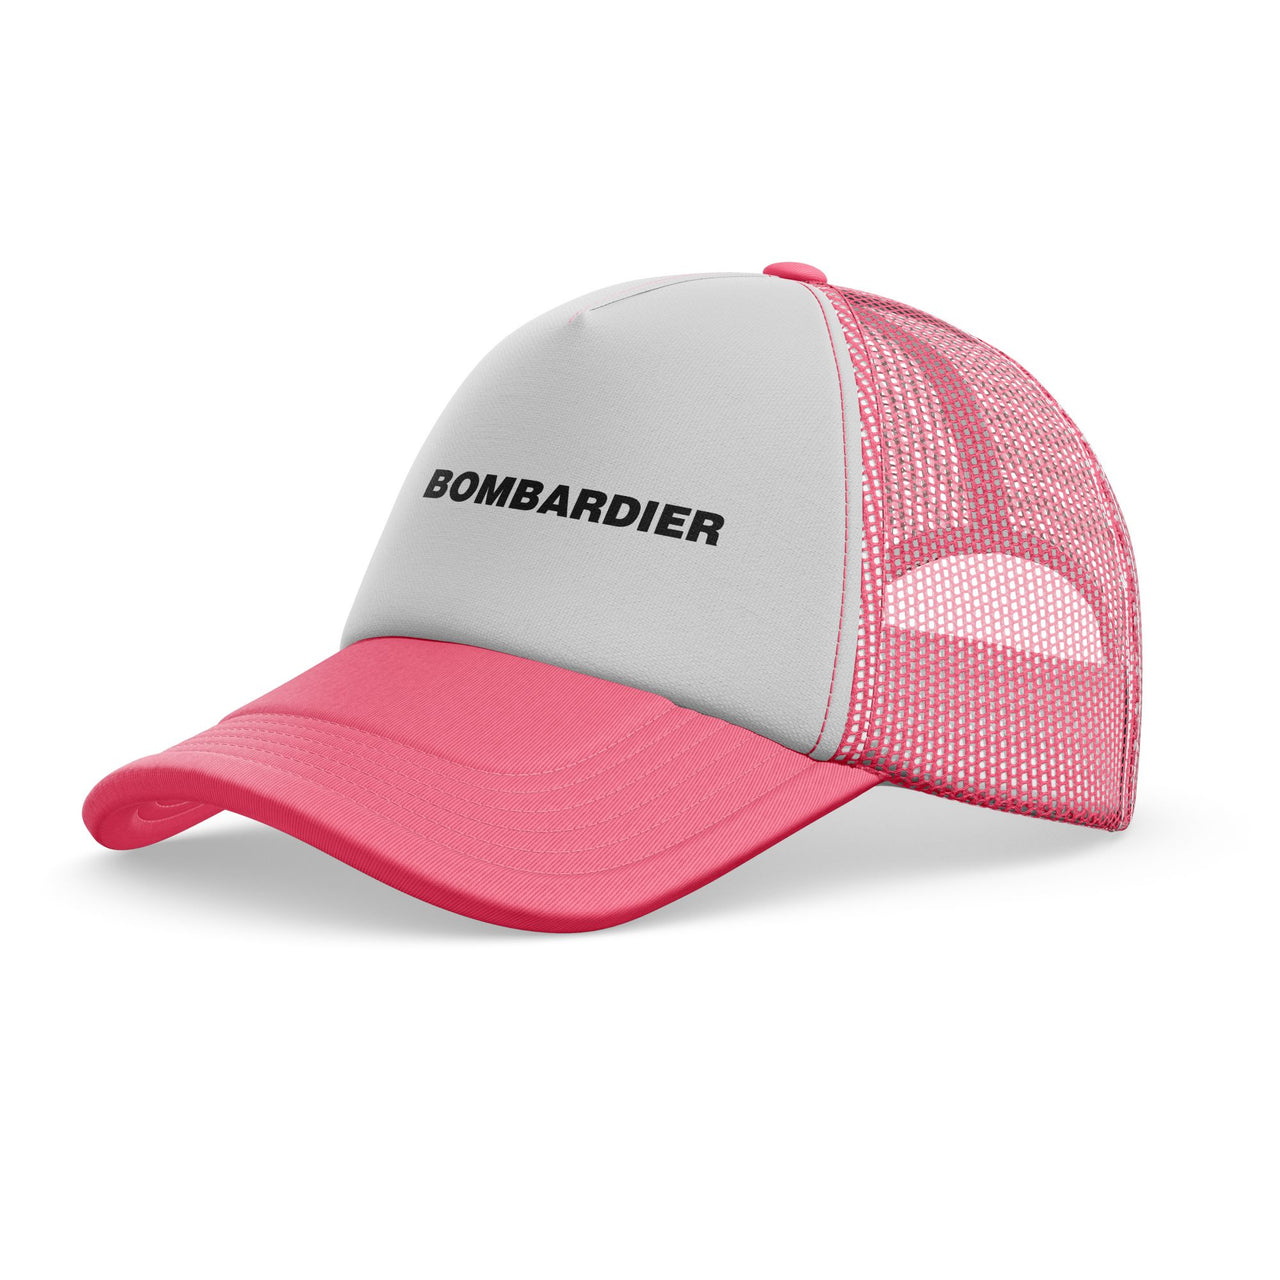 Bombardier & Text Designed Trucker Caps & Hats